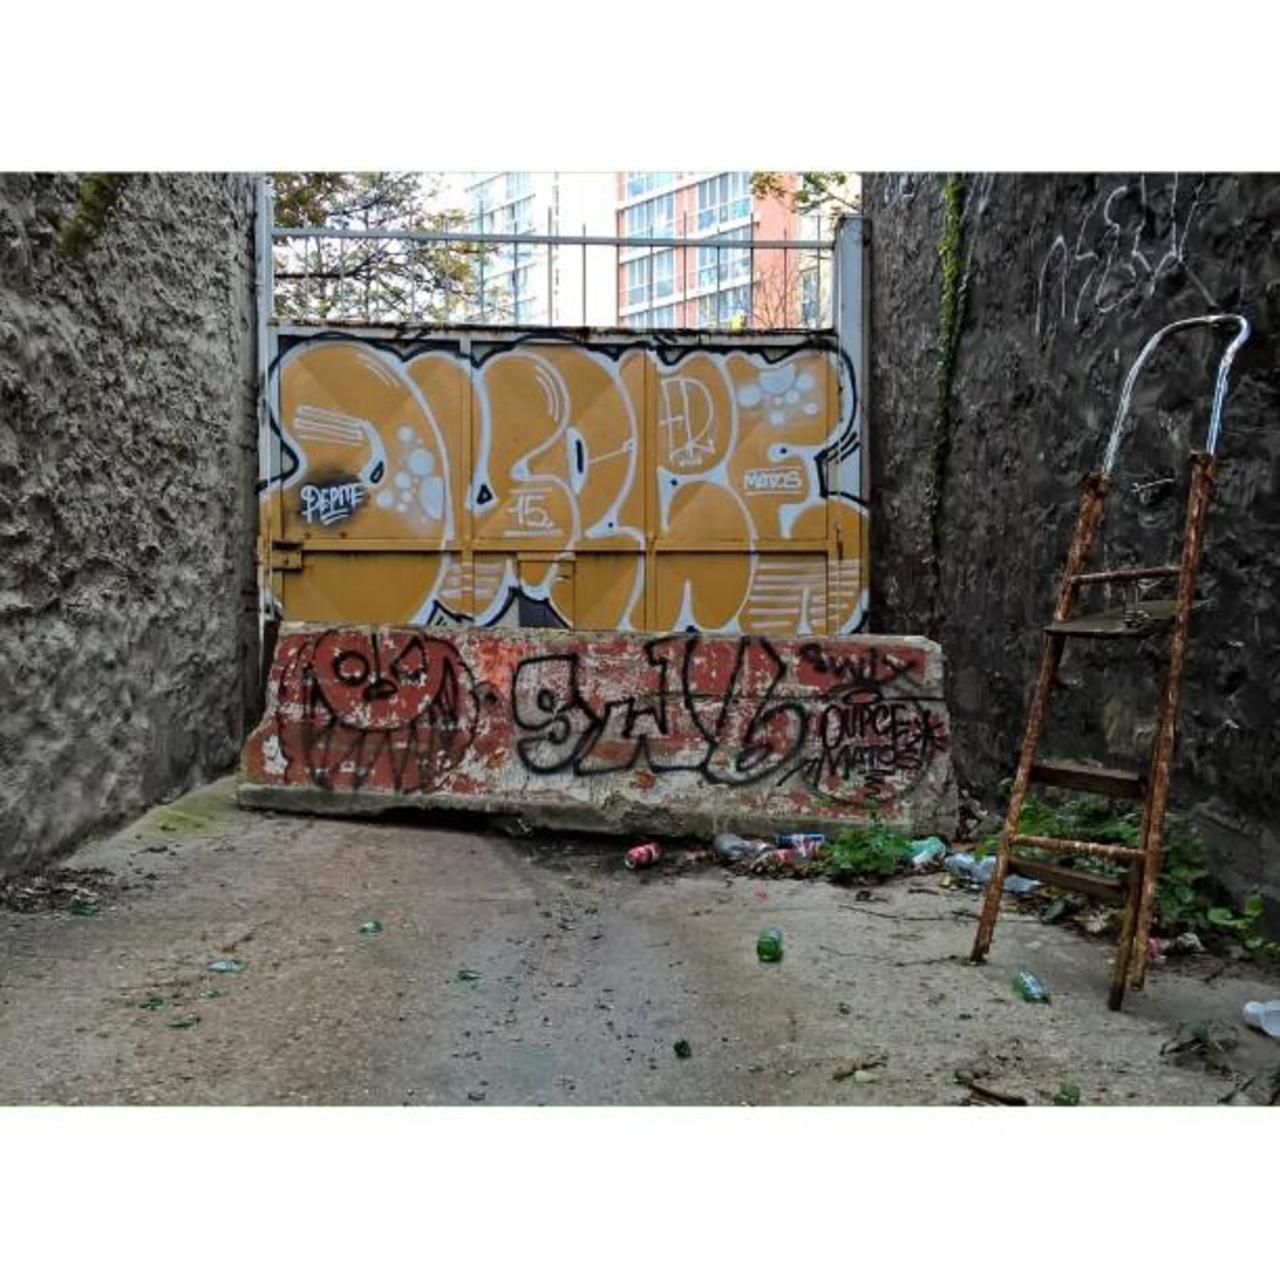 #Paris #graffiti photo by @maxdimontemarciano http://ift.tt/1Lidr5A #StreetArt http://t.co/CrqGUaGklK